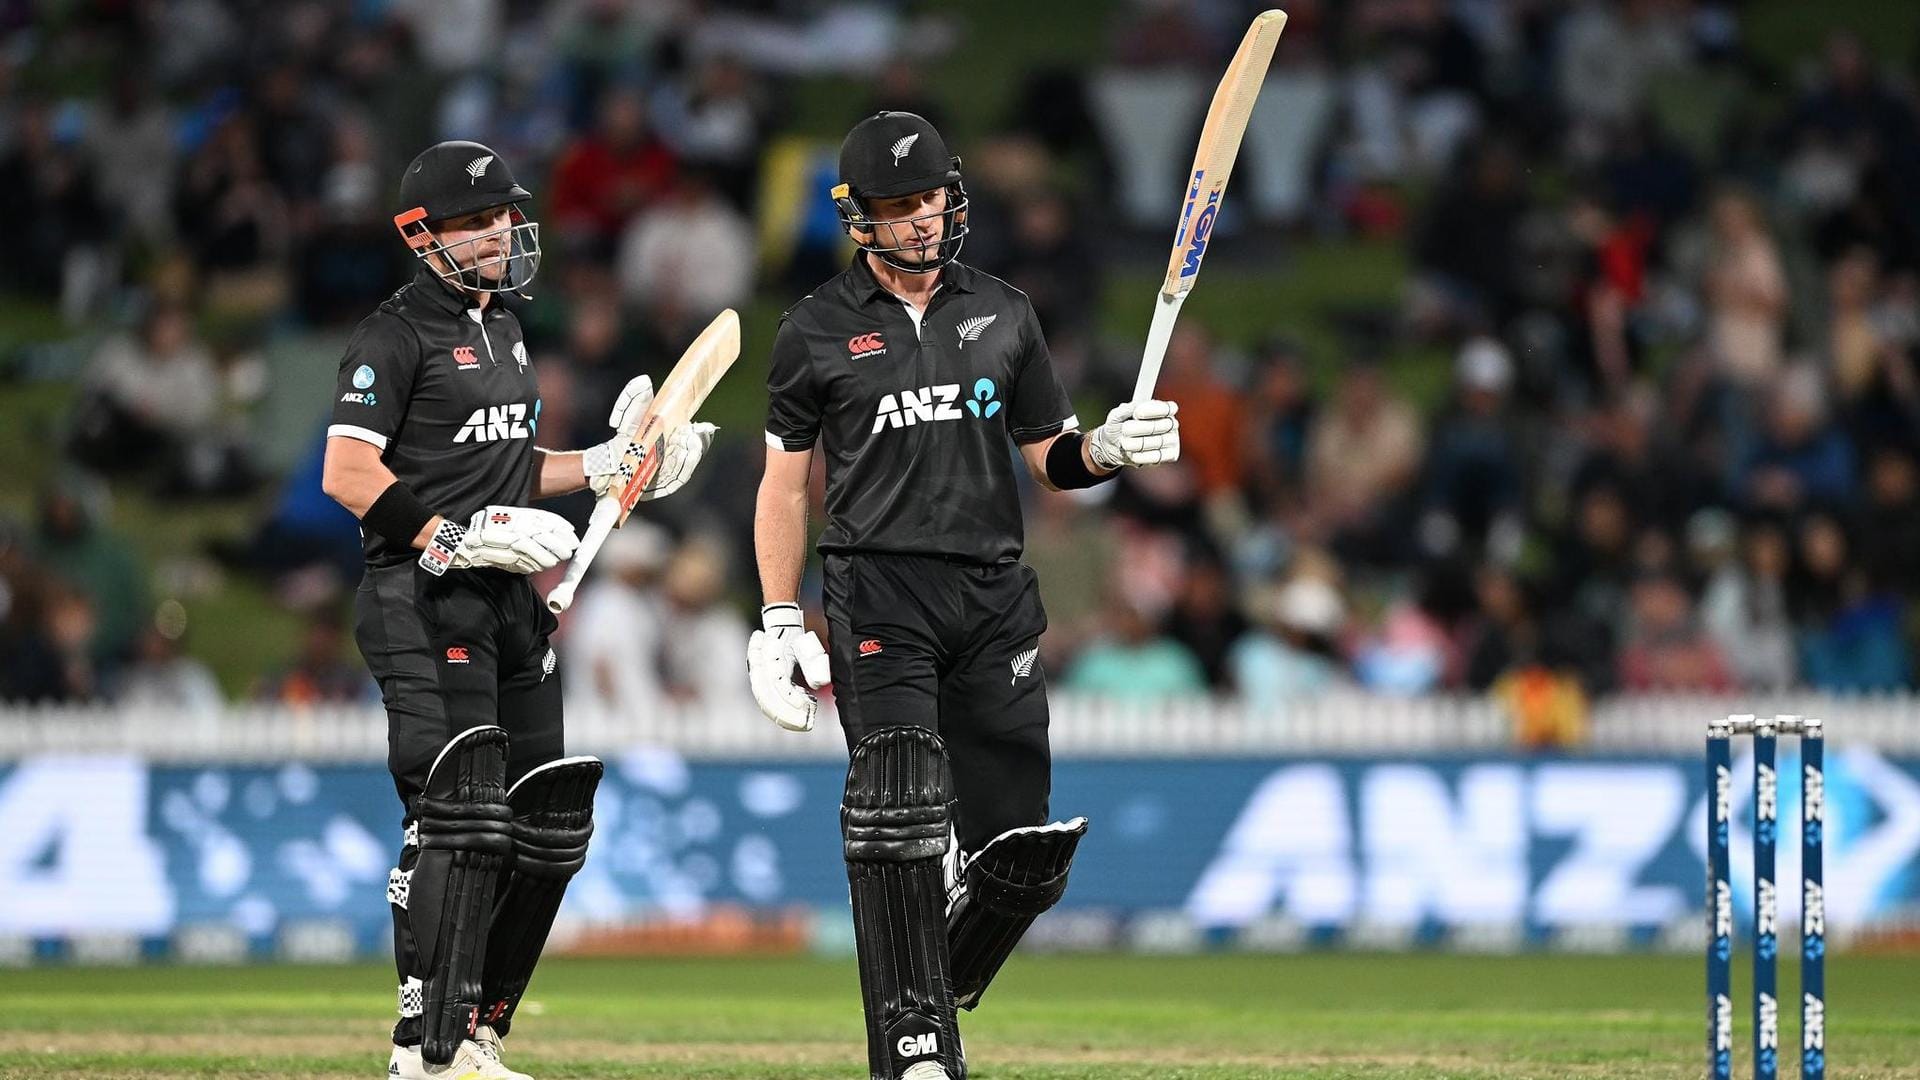 NZ's Will Young clocks match-winning half-century versus SL: Key stats 